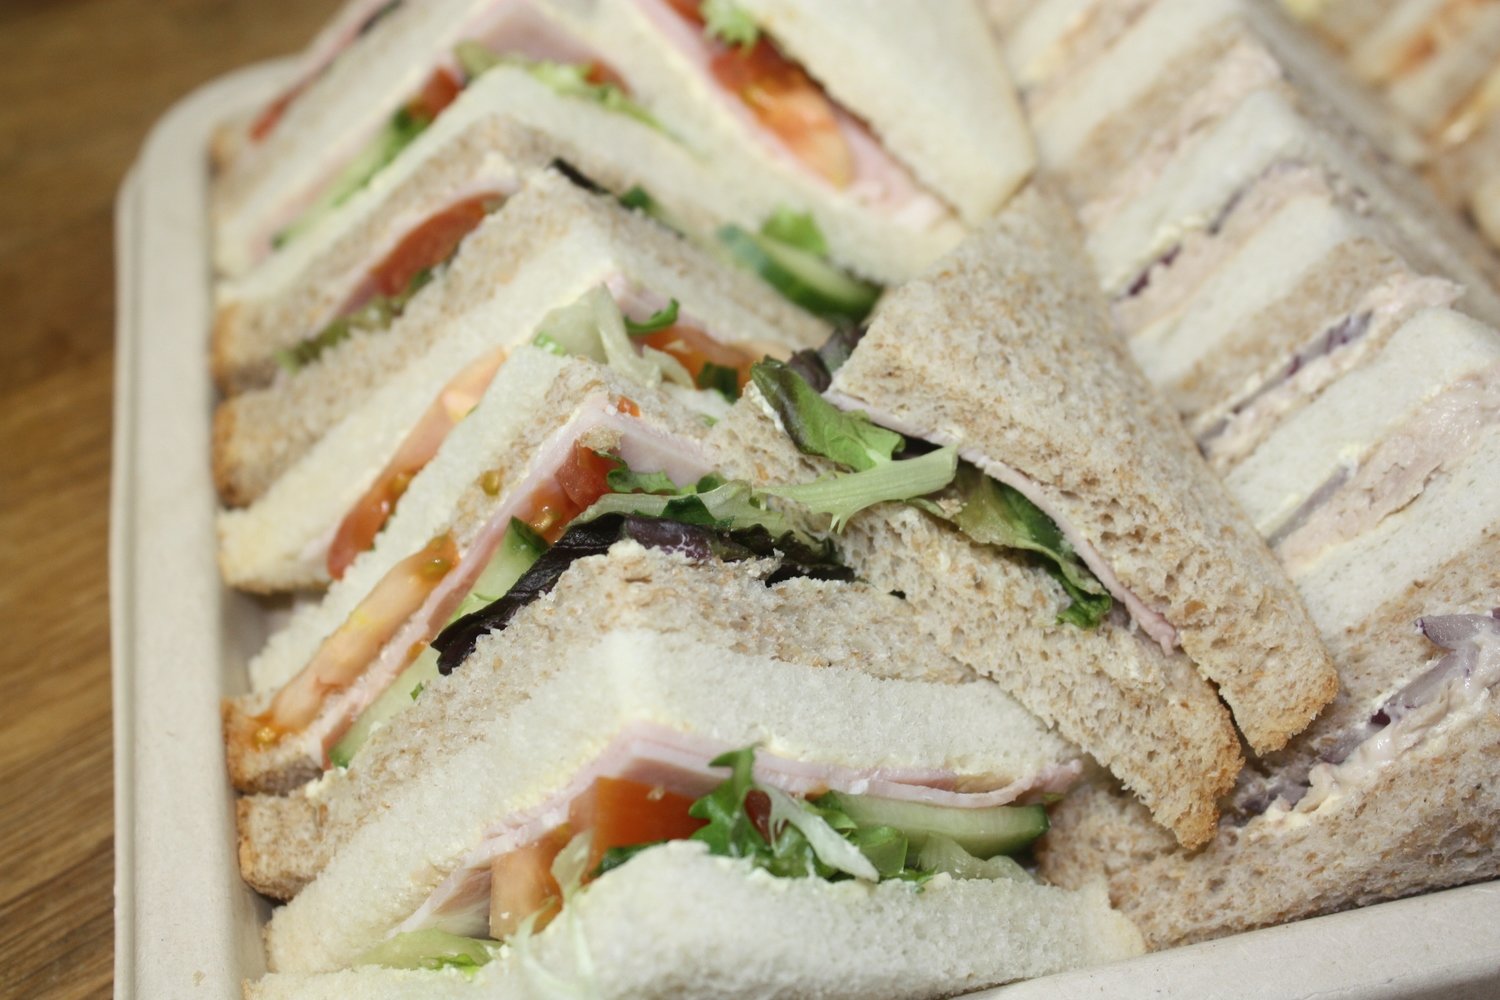 Sandwich Platter - from